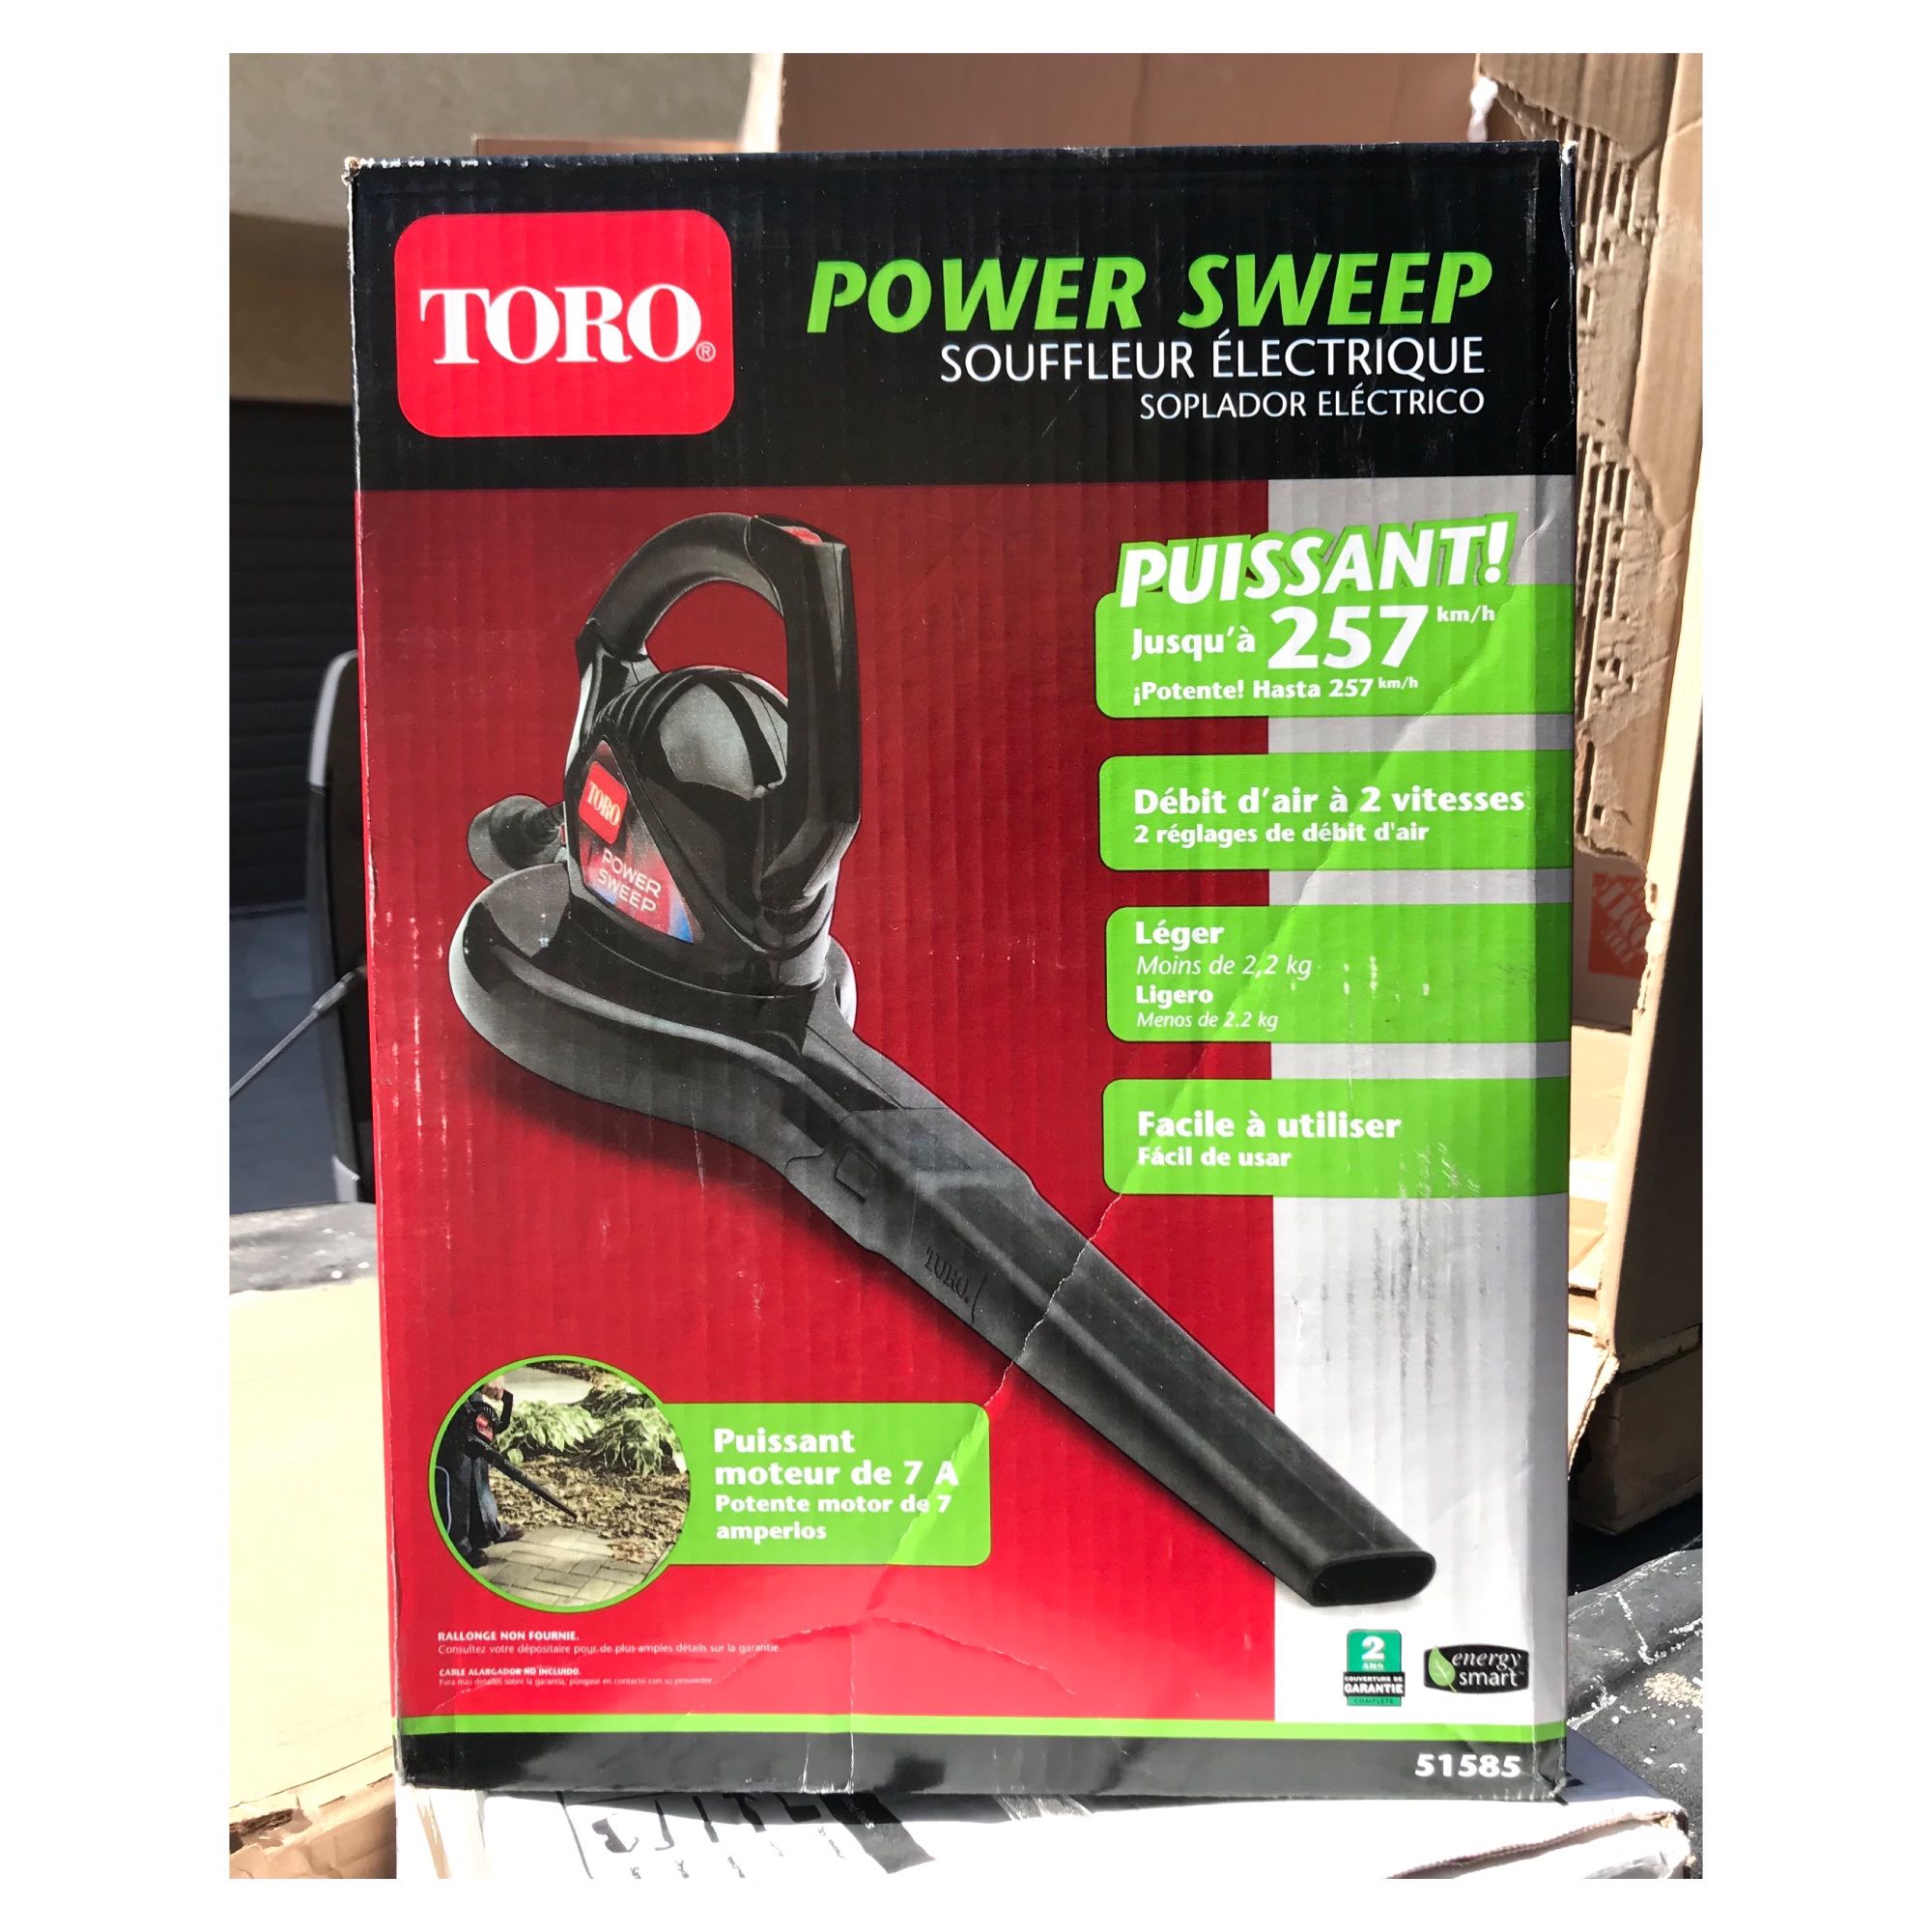 Toro Power Sweep 160 MPH 155 CFM 7 Amp Electric Leaf Blower